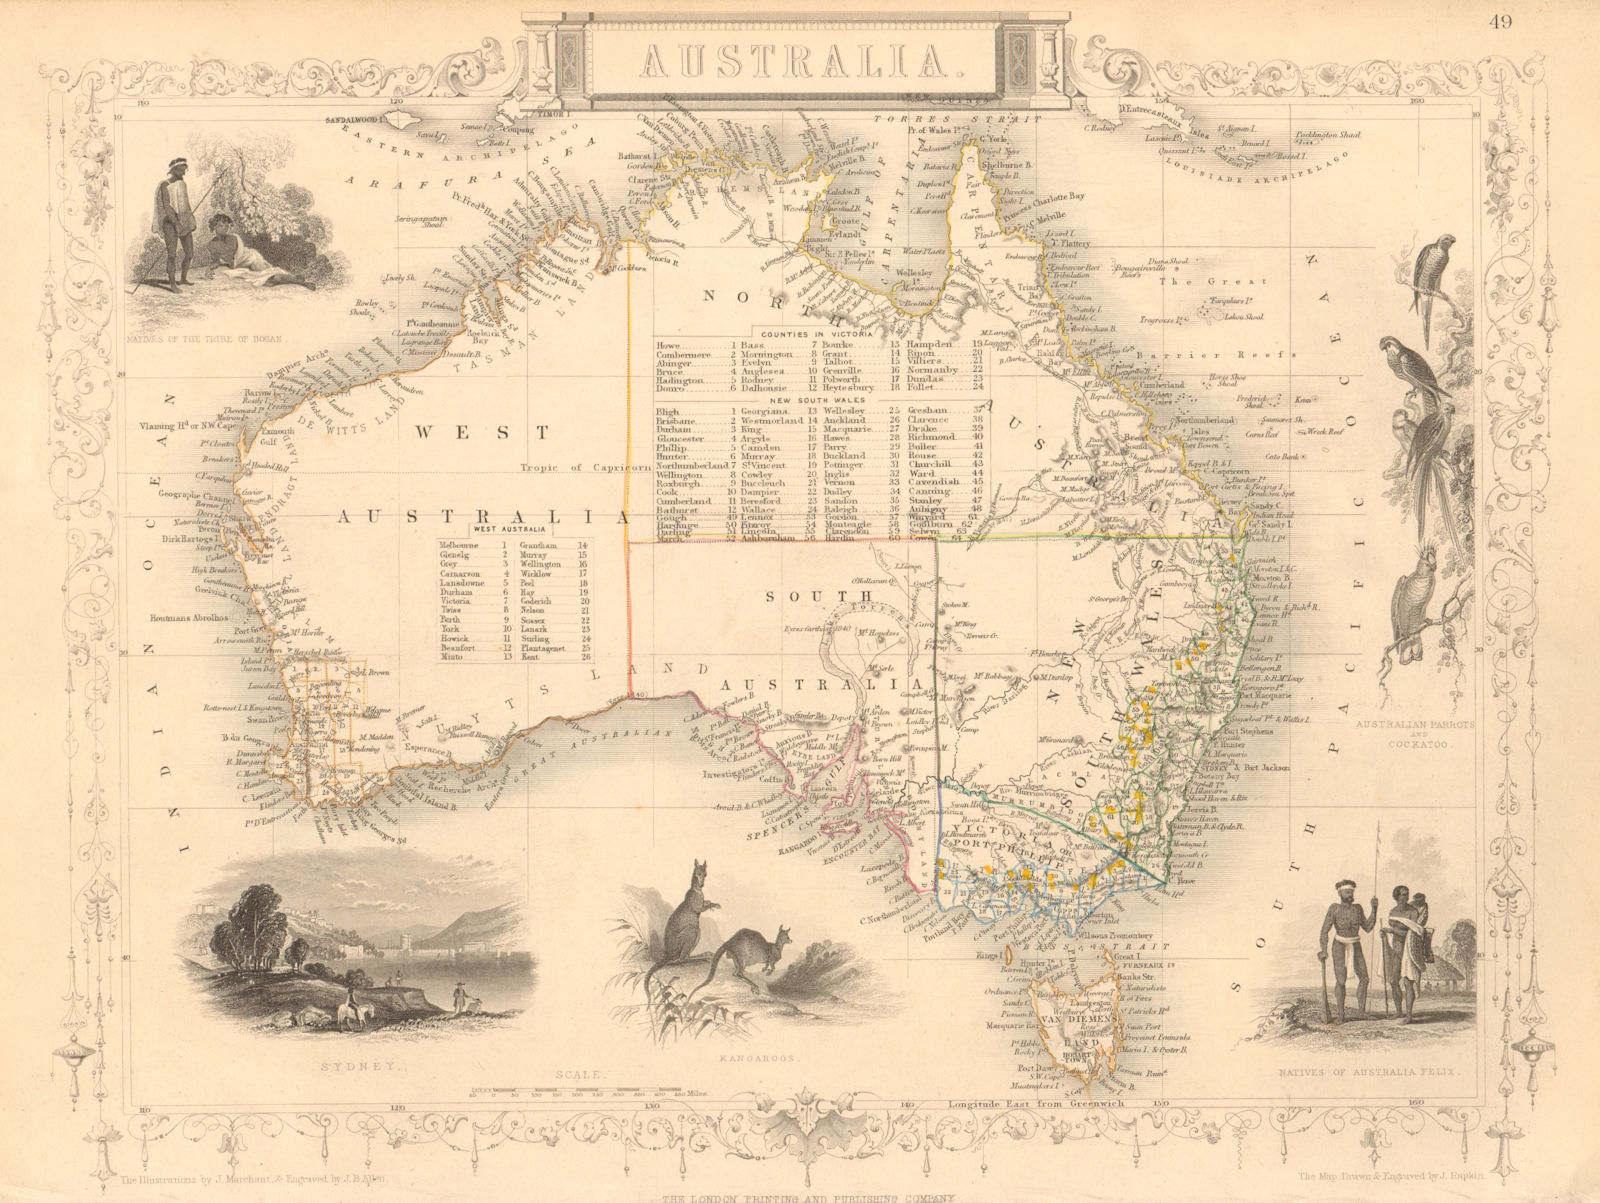 AUSTRALIA. no Queensland (est 1859). Showing Goldfields. RAPKIN/TALLIS 1851 map